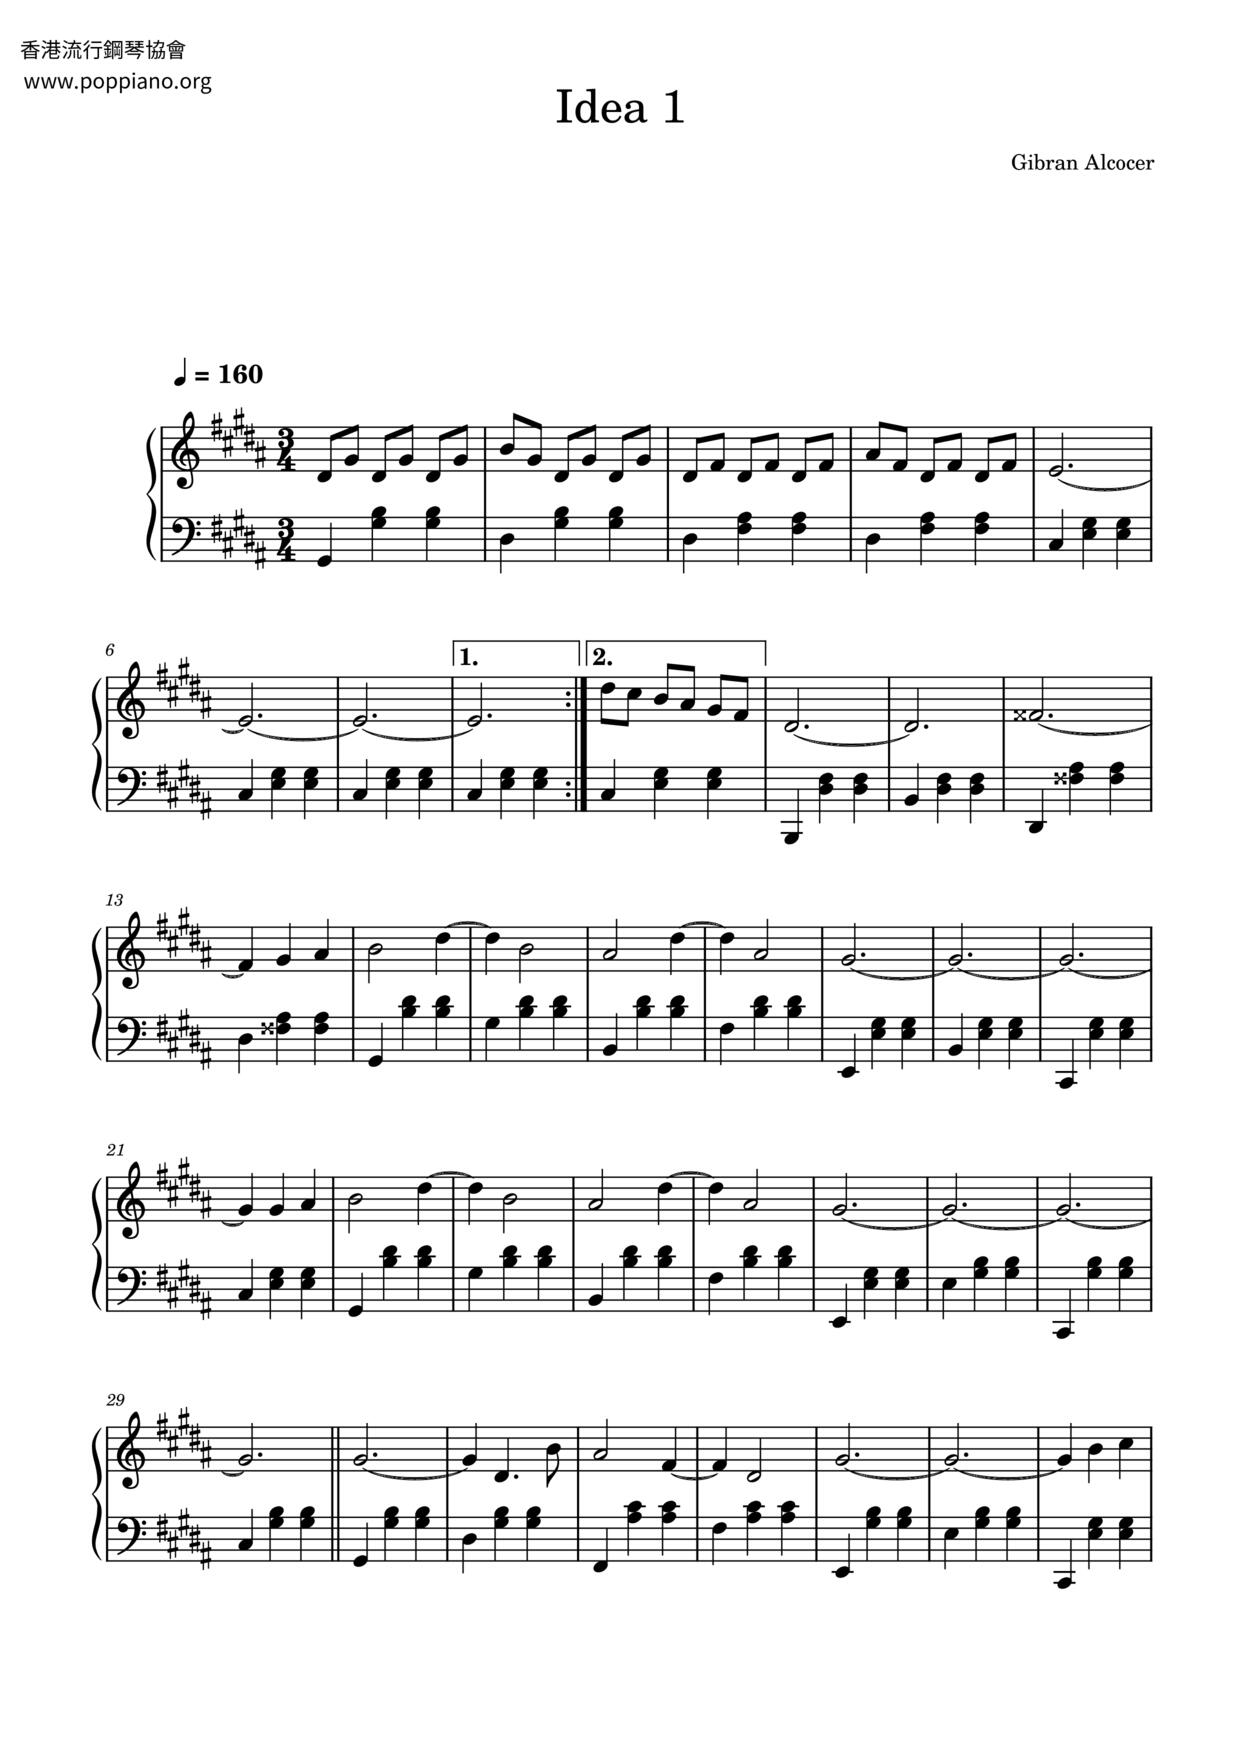 Idea 1ピアノ譜